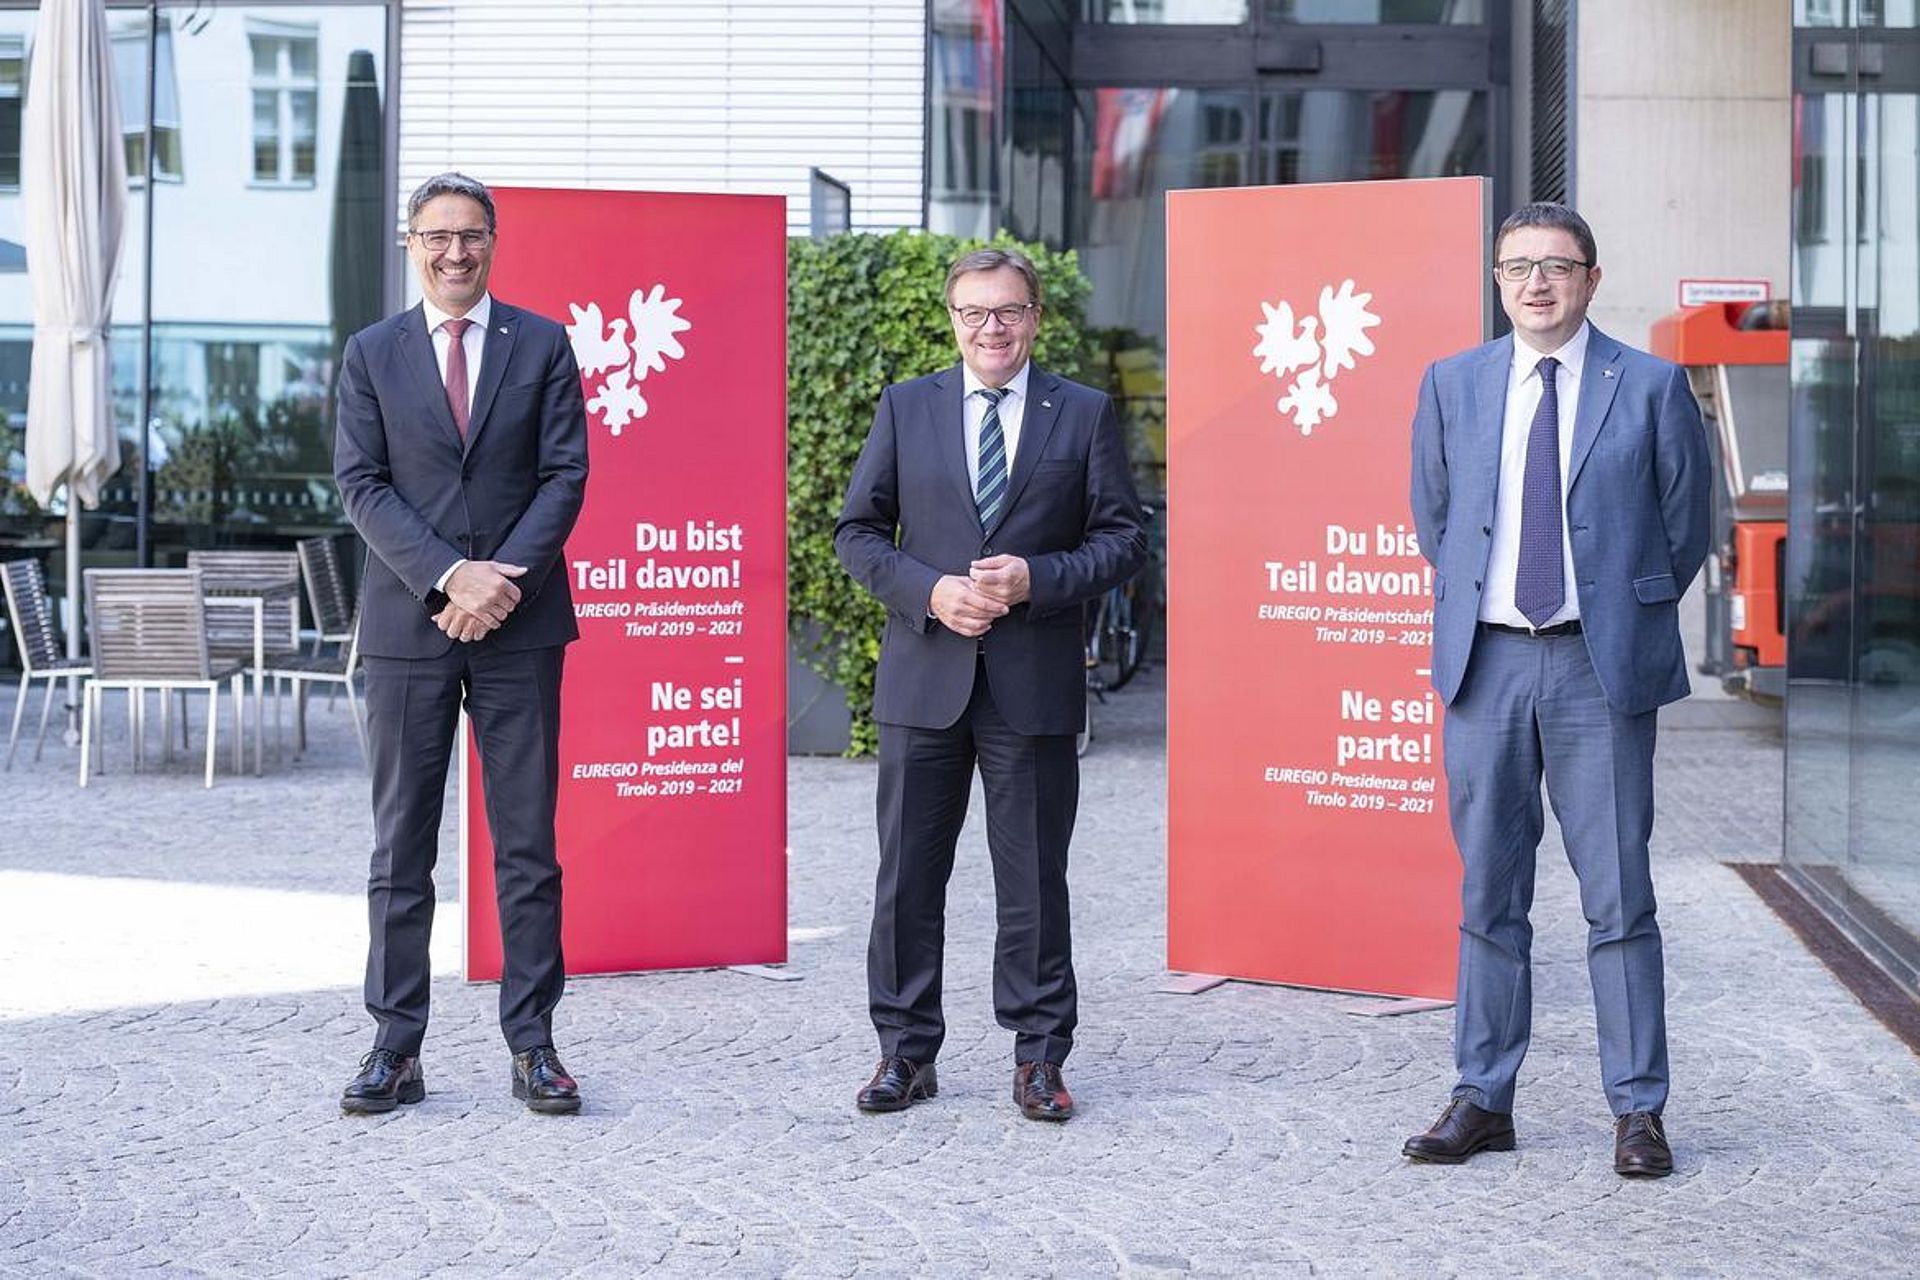 The three Euregio-governors, f.l.t.r.: Arno Kompatscher, Günther Platter and Maurizio Fugatti.